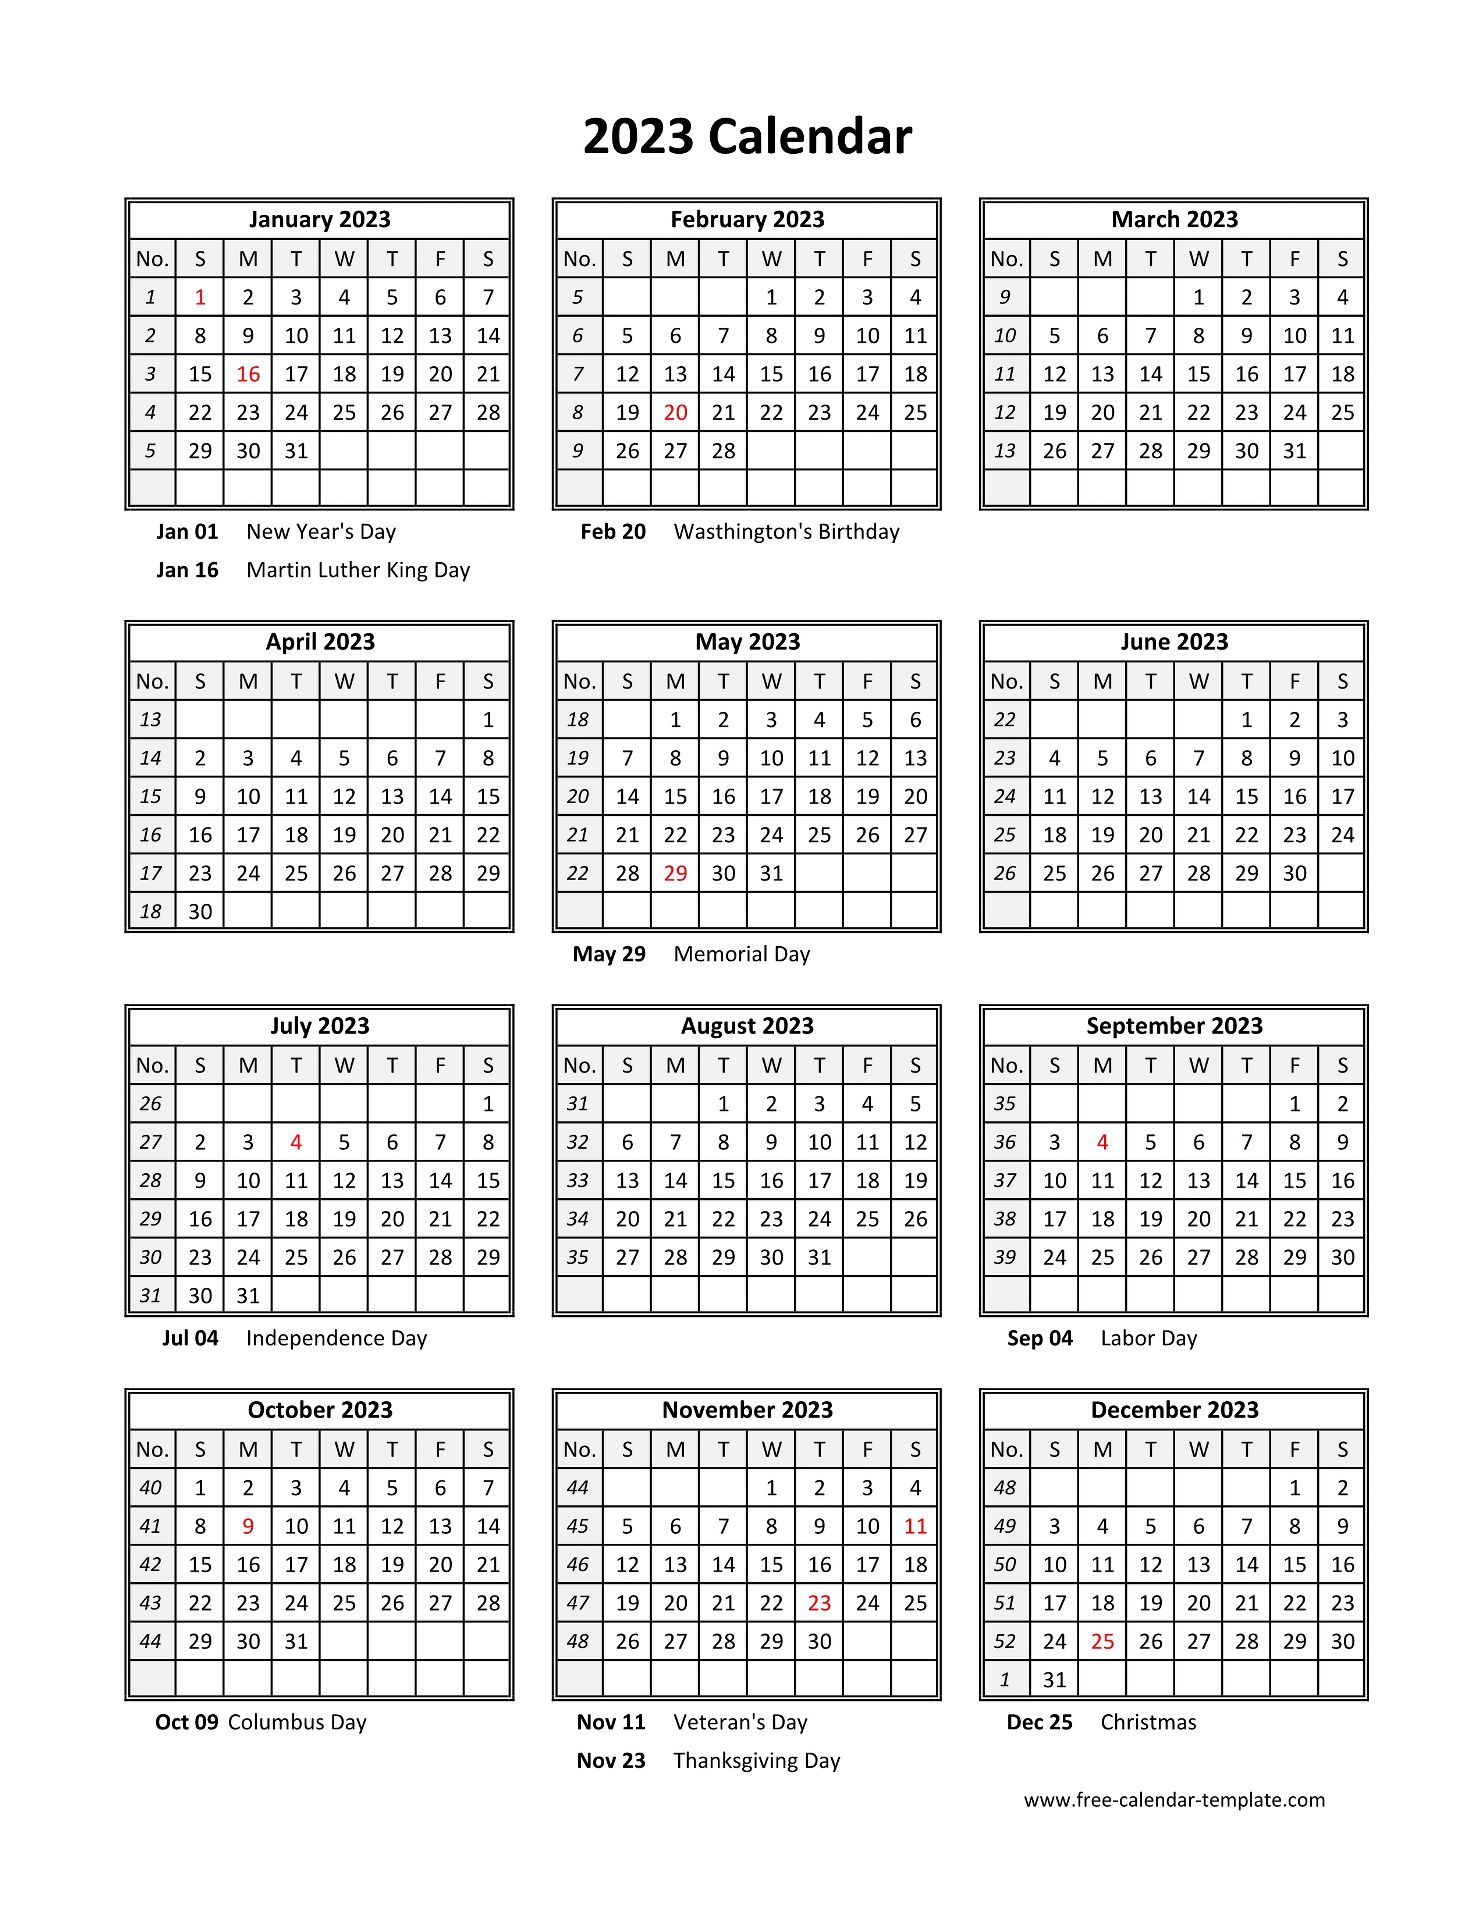 Calendar 2023 Pdf Free Download With Holidays – Get Calendar 2023 Update